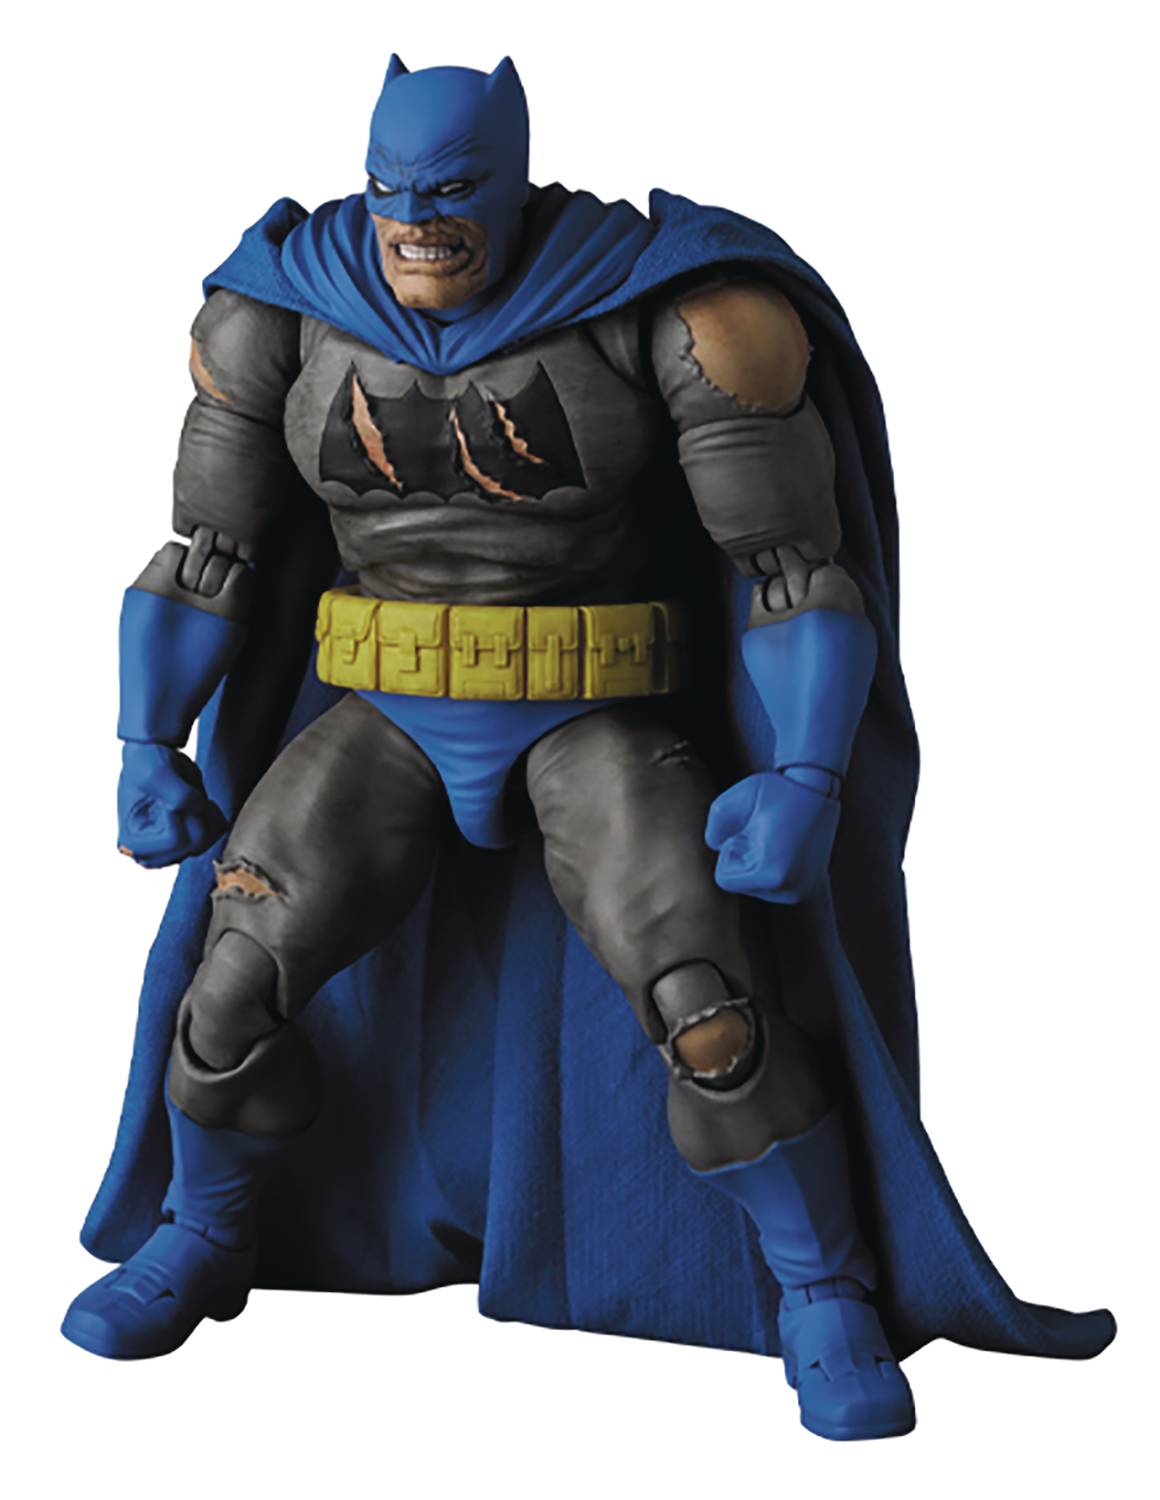 batman frank miller action figure